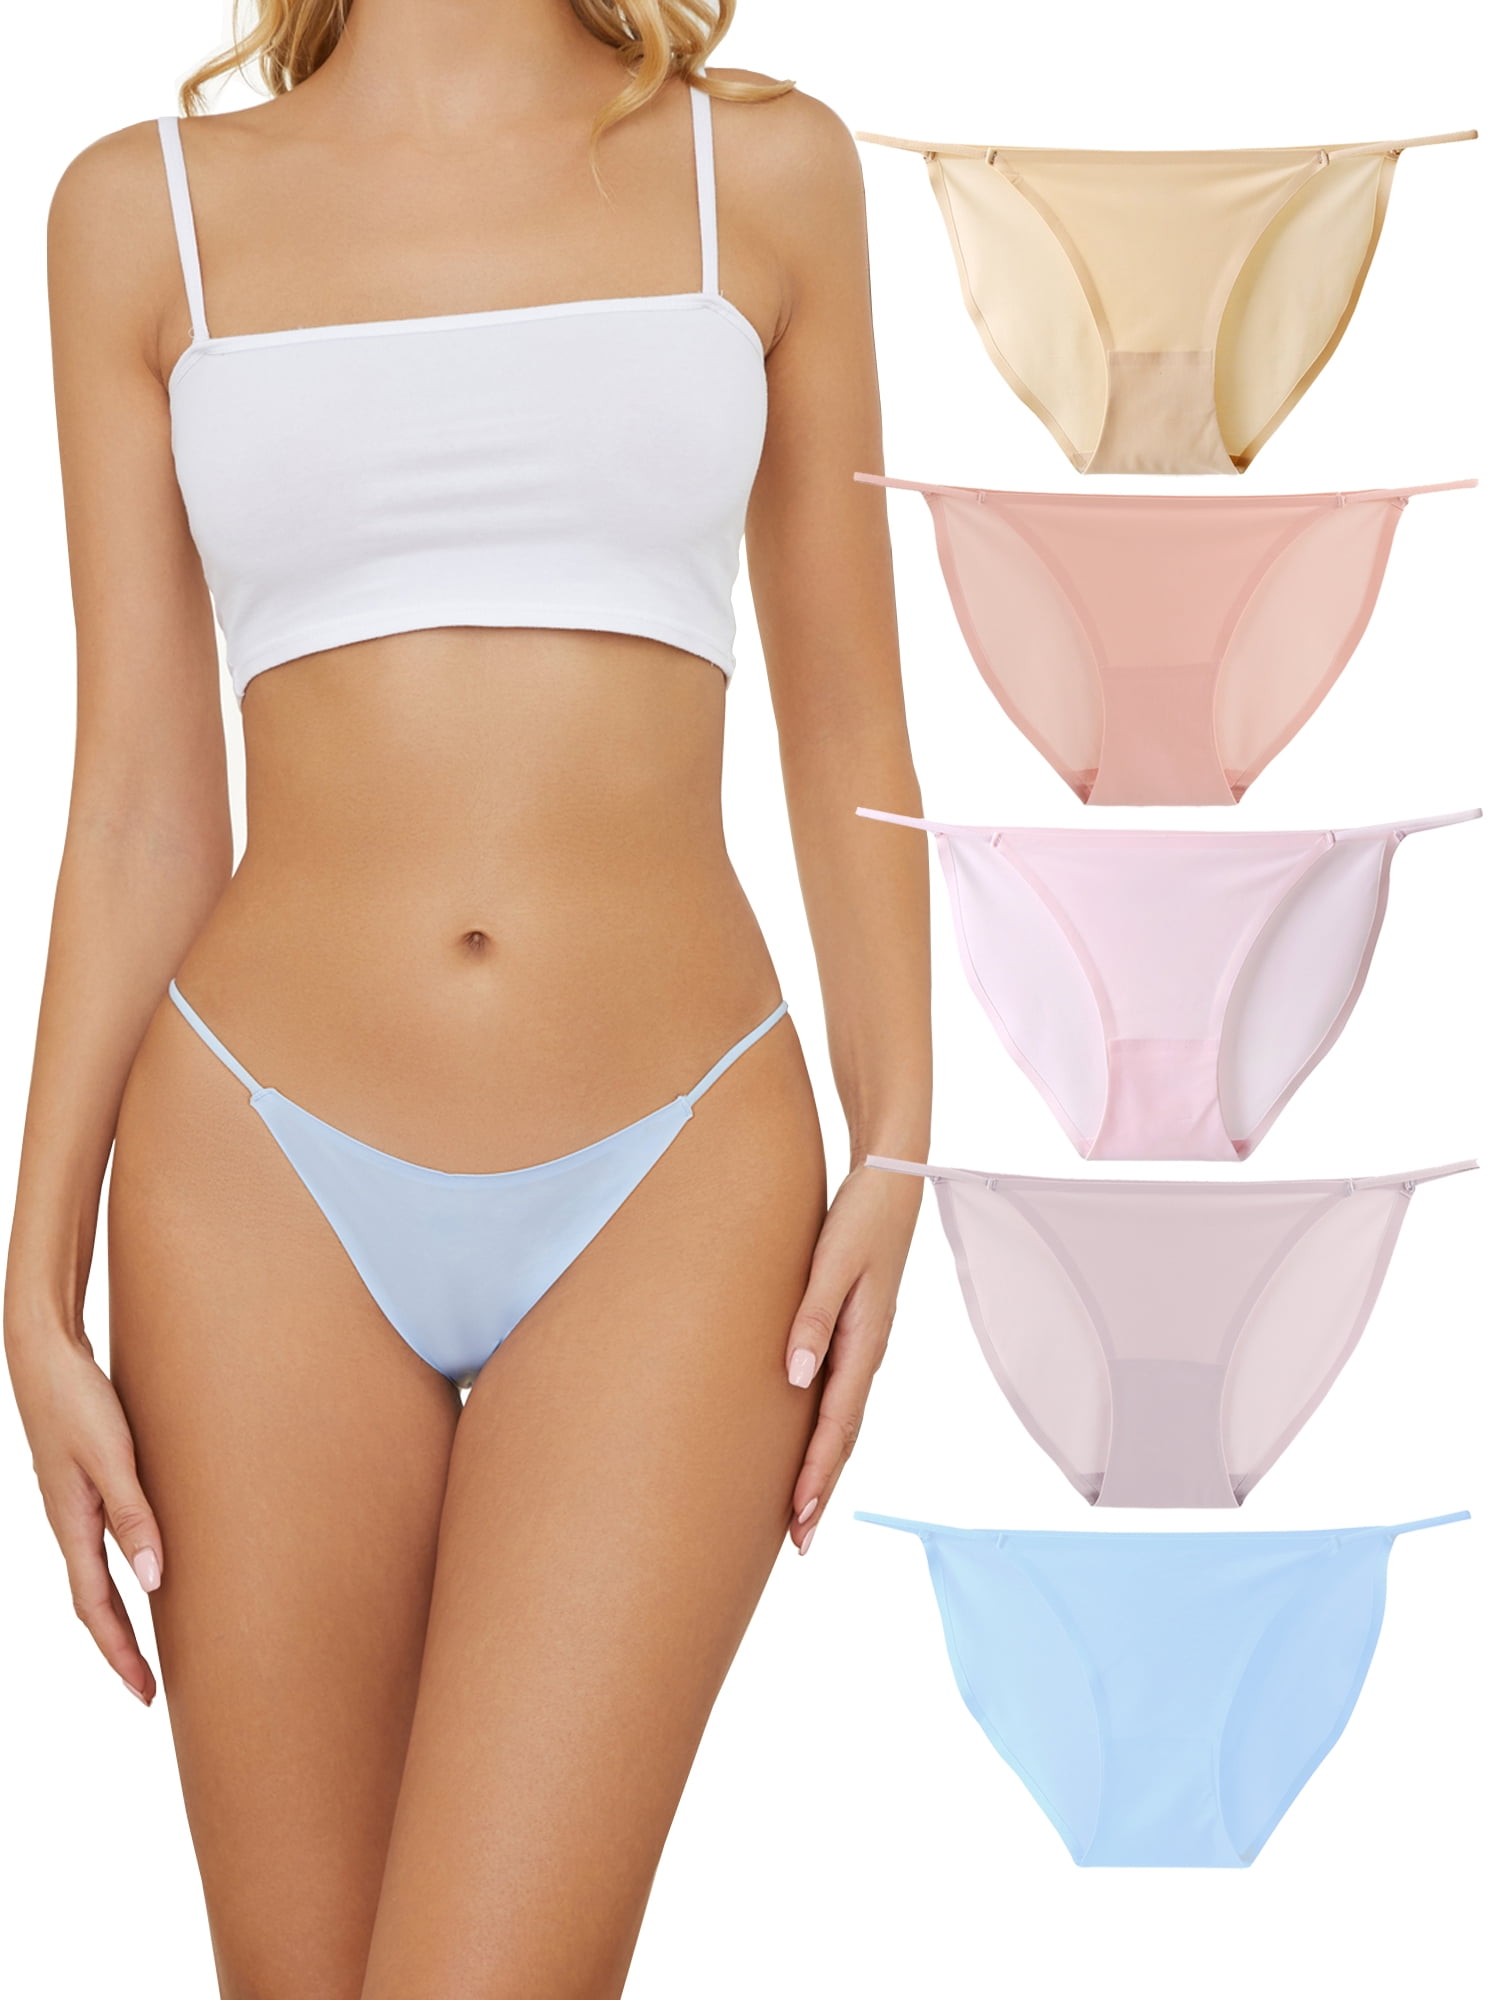 GaaiKei Women's String Bikini Underwear Sexy Seamless Panties,5-Pack,Size 6  